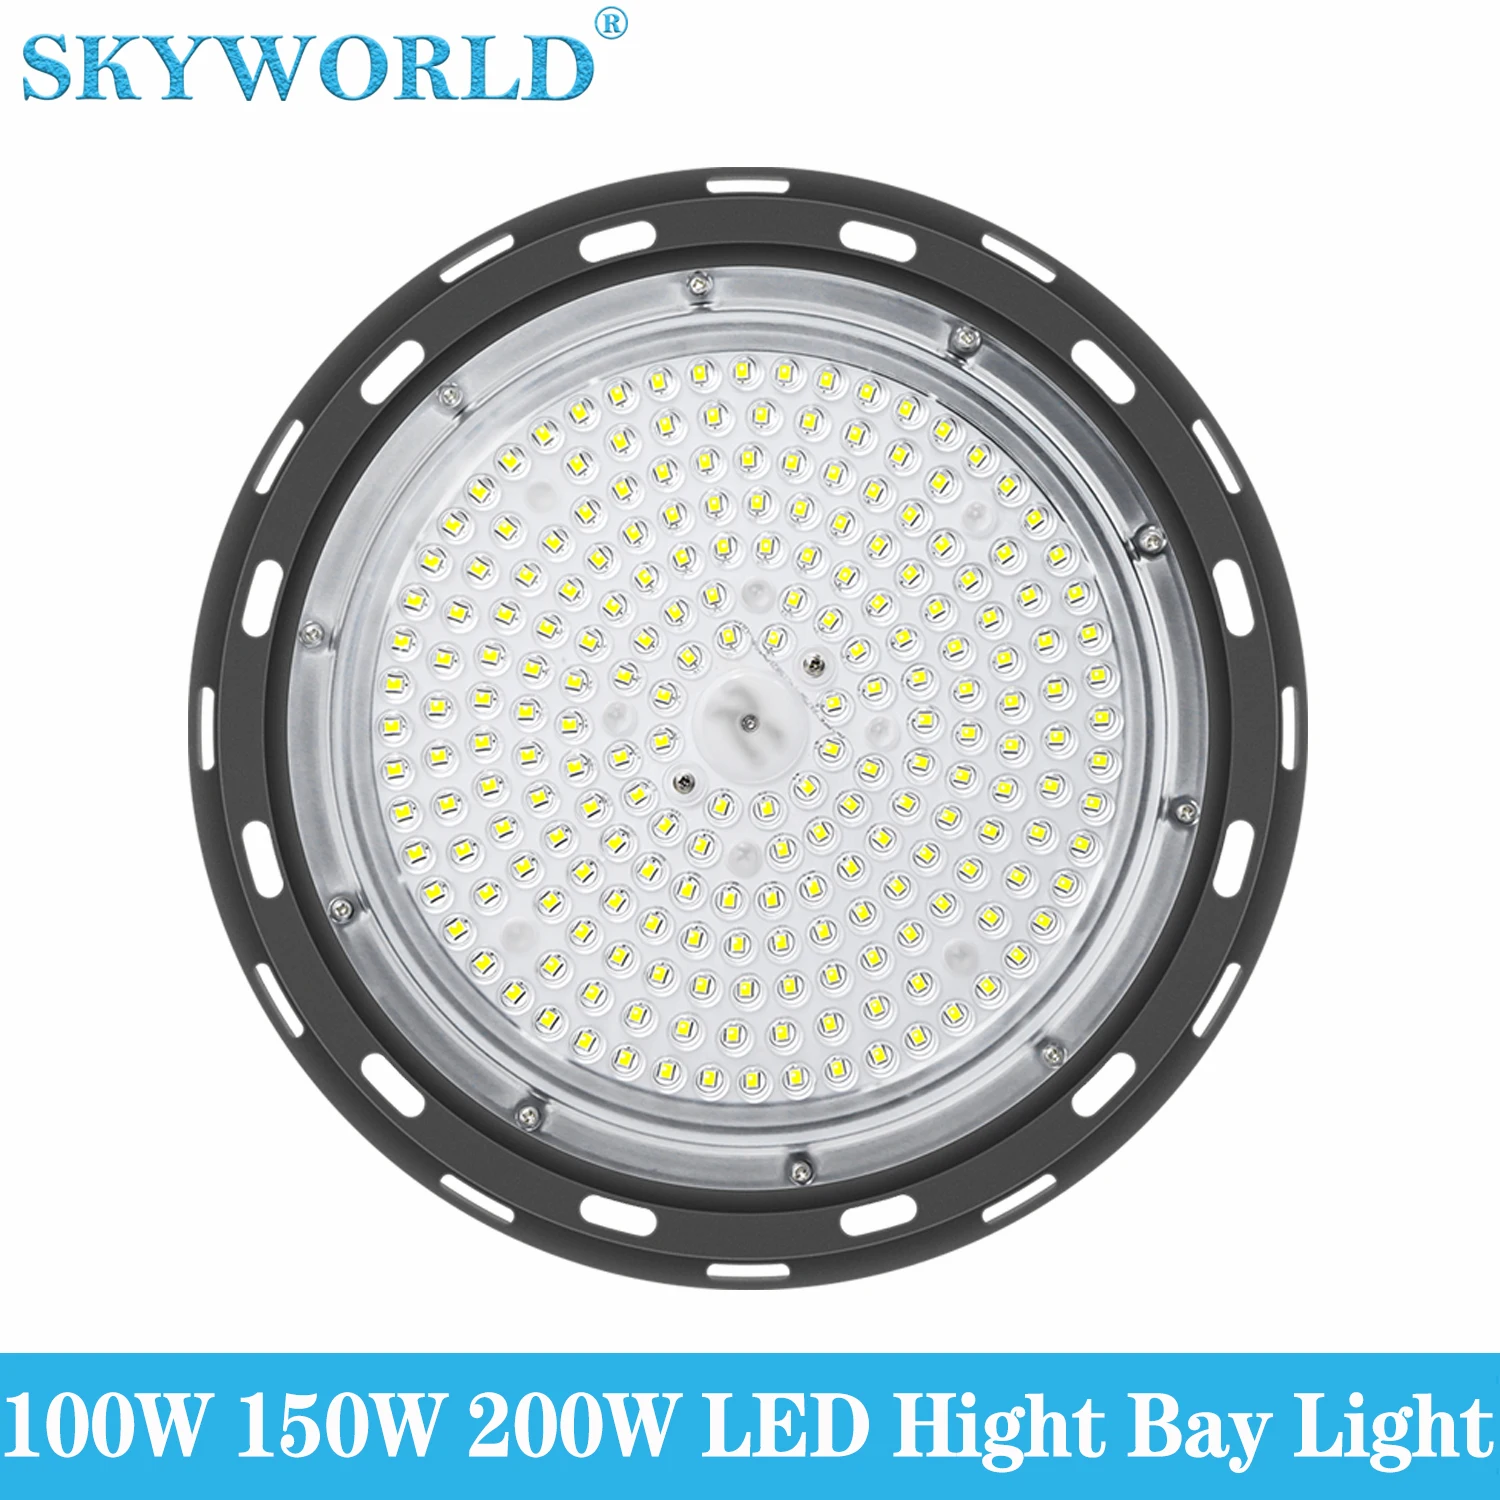 SKYWORLD 100-200W UFO LED High Bay Light 6000K Daylight Shop Lights for Warehouse Workshop Industrial Factory Library Basement